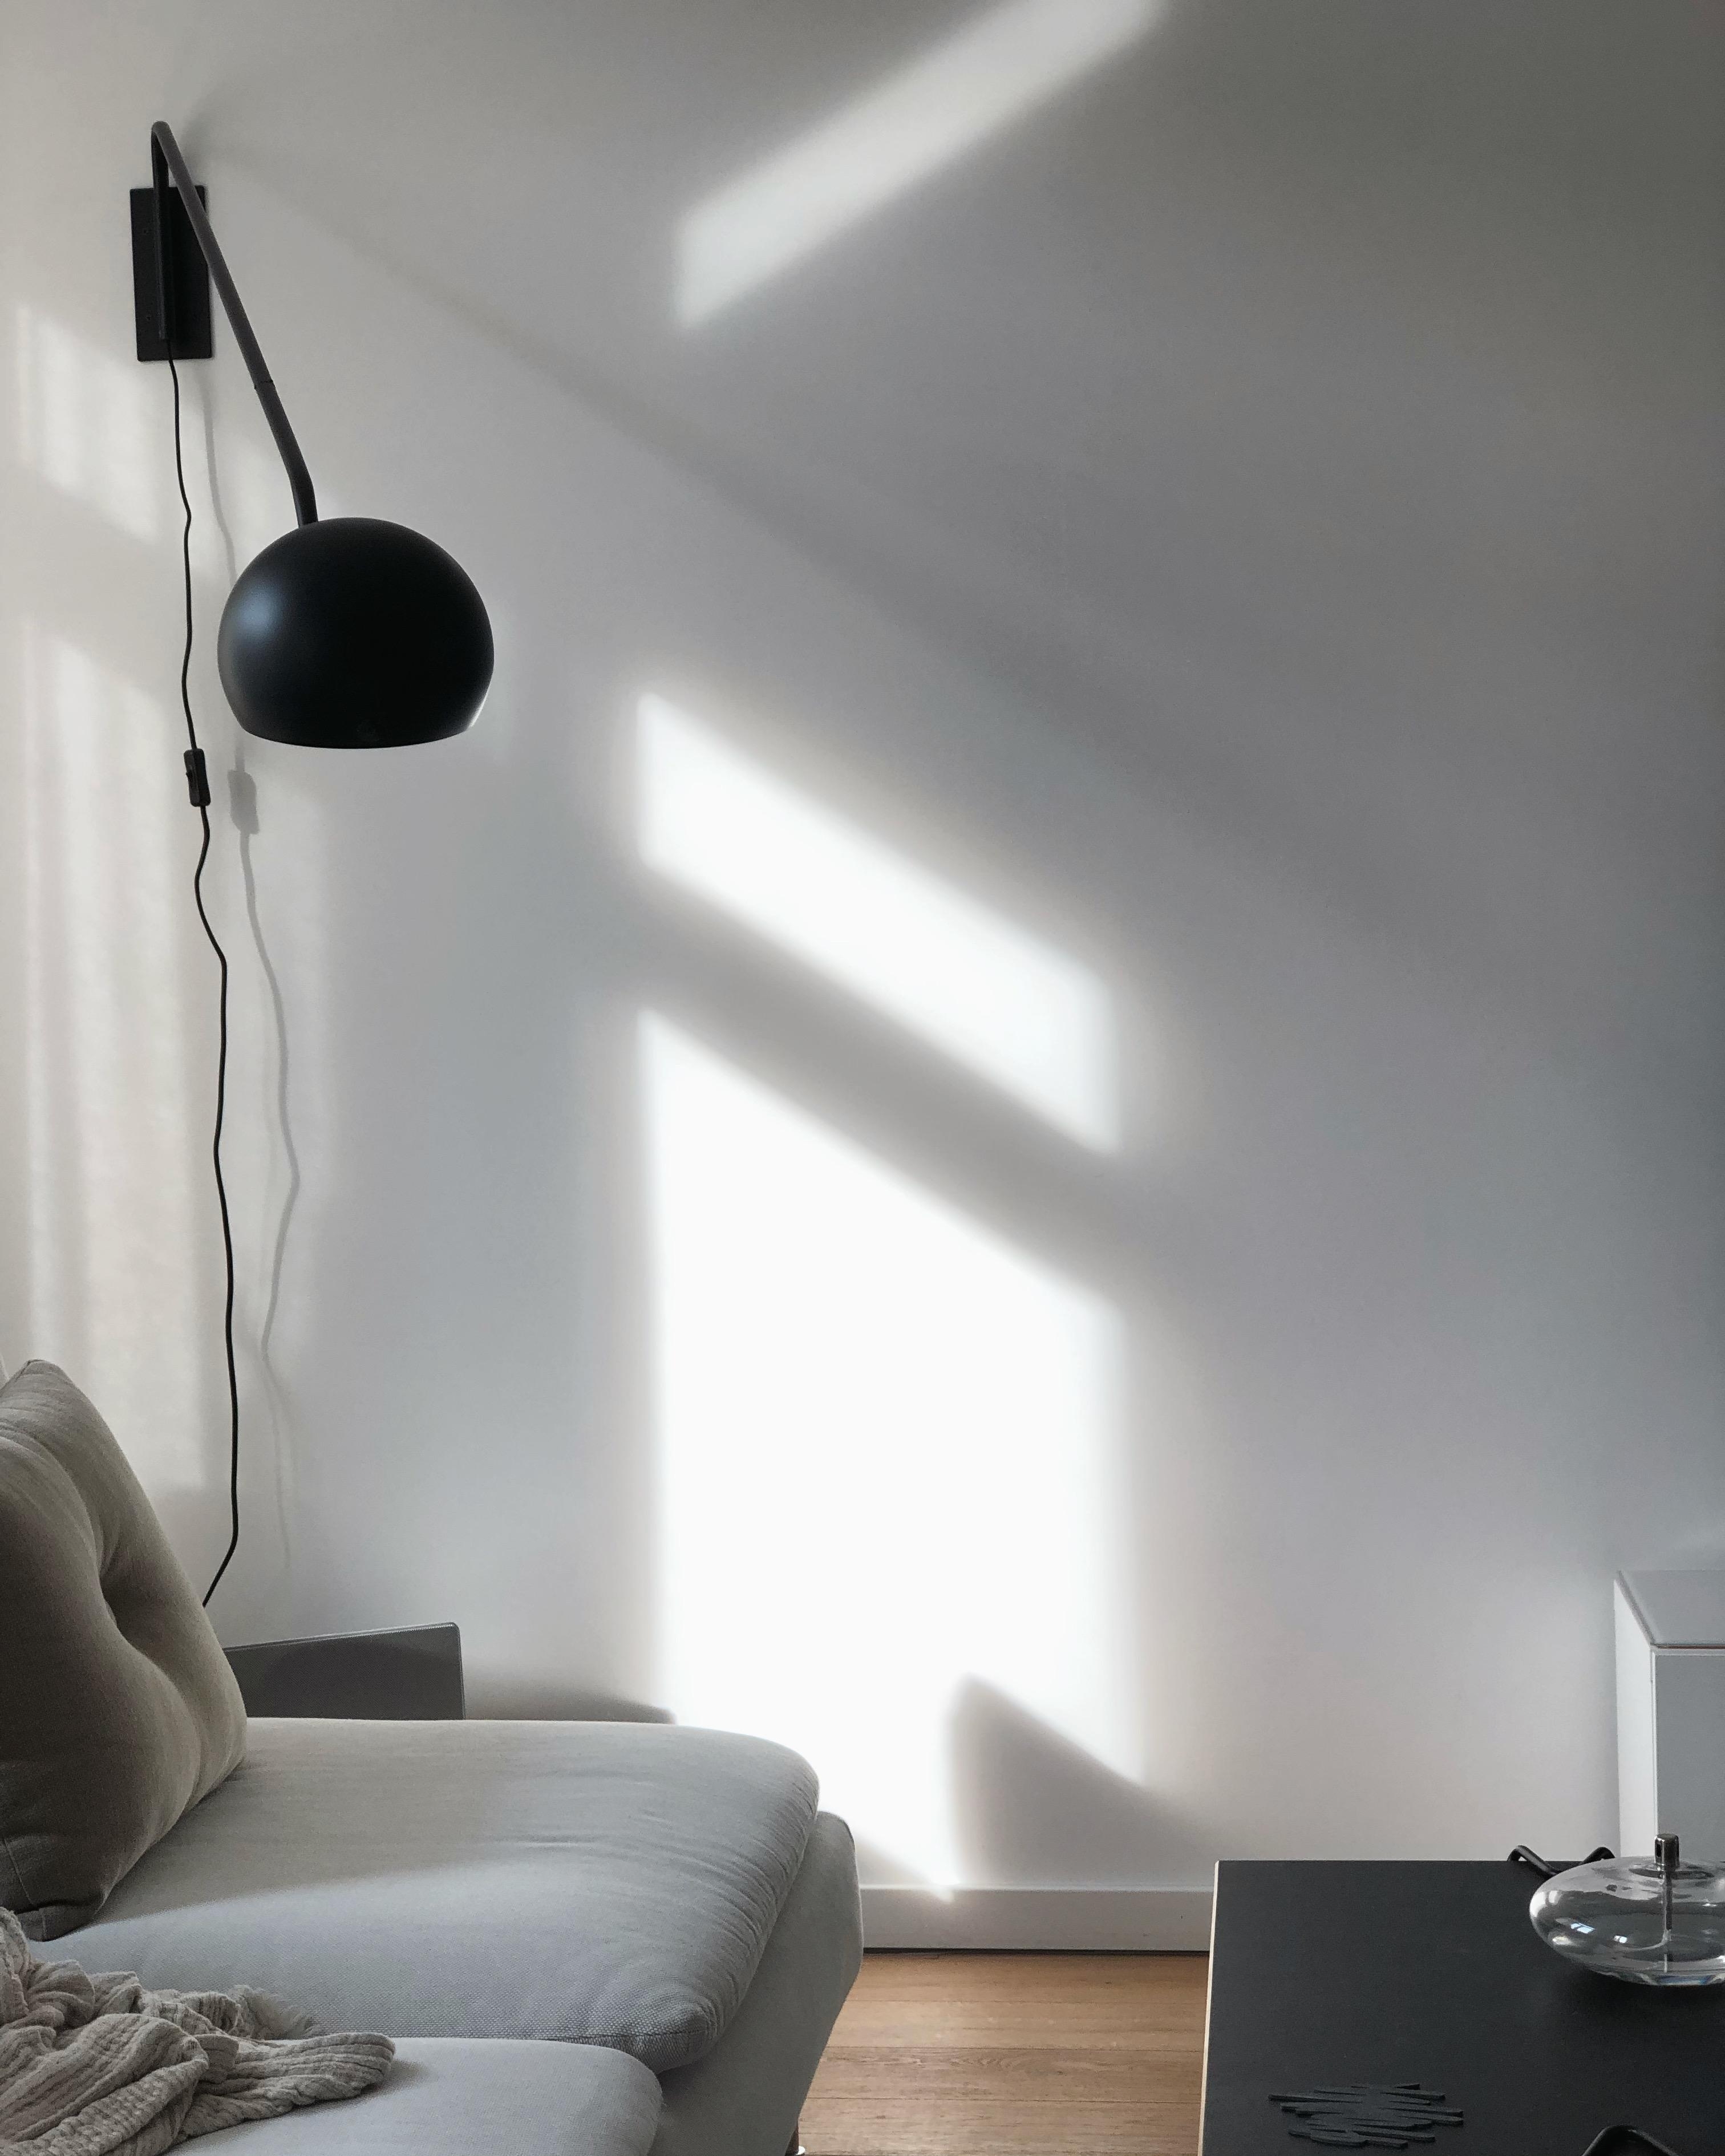 #monochrome #schwarzweiss #lampe #livingroom #wohnzimmer #wanddeko #light #couch #nordicliving #couchstyle